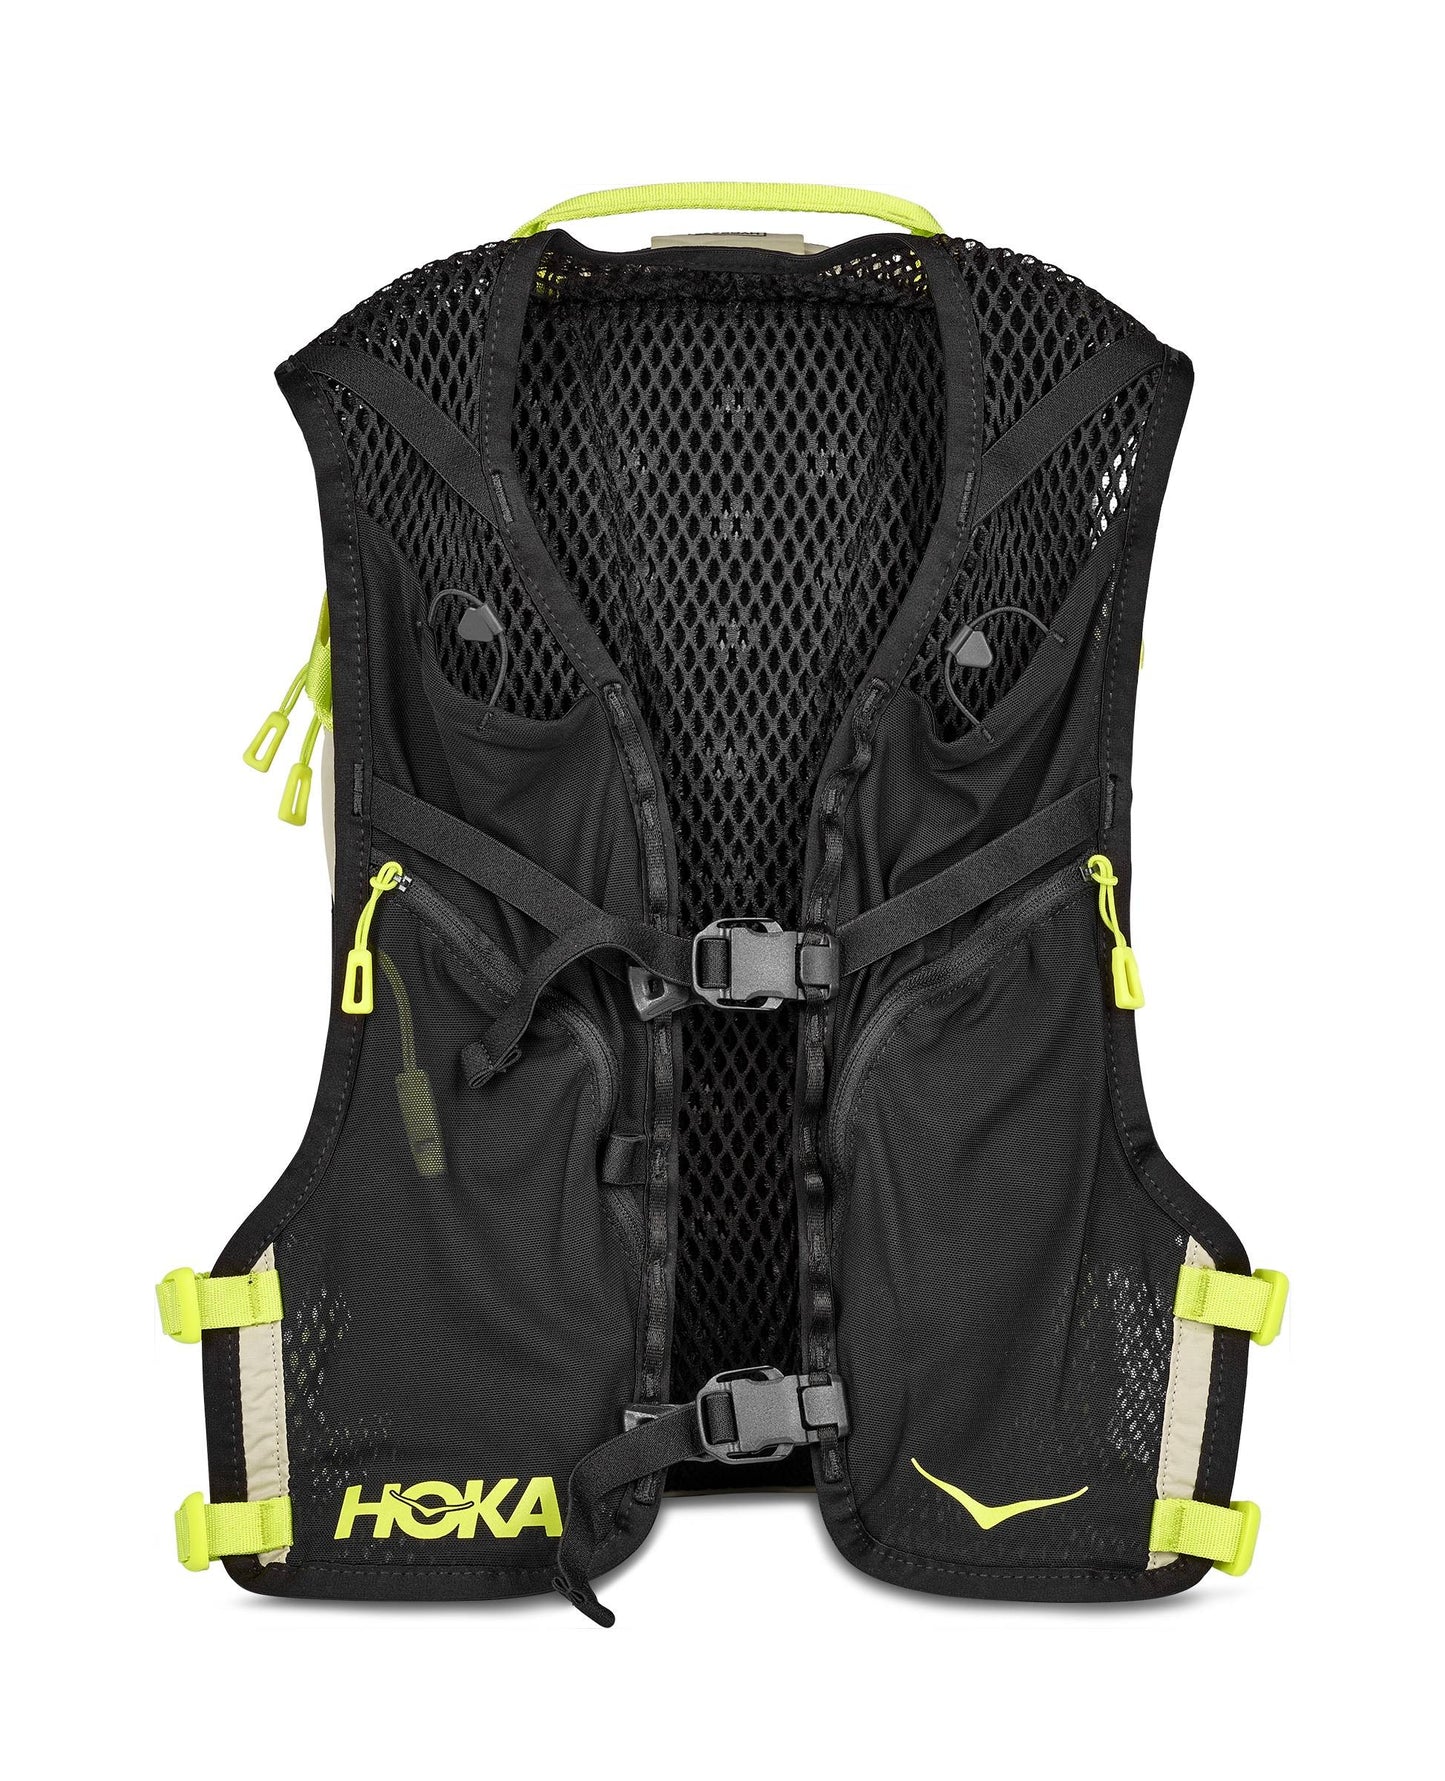 HOKA Hike Pack 13L – תיק ריצה - טיול 13 ליטר